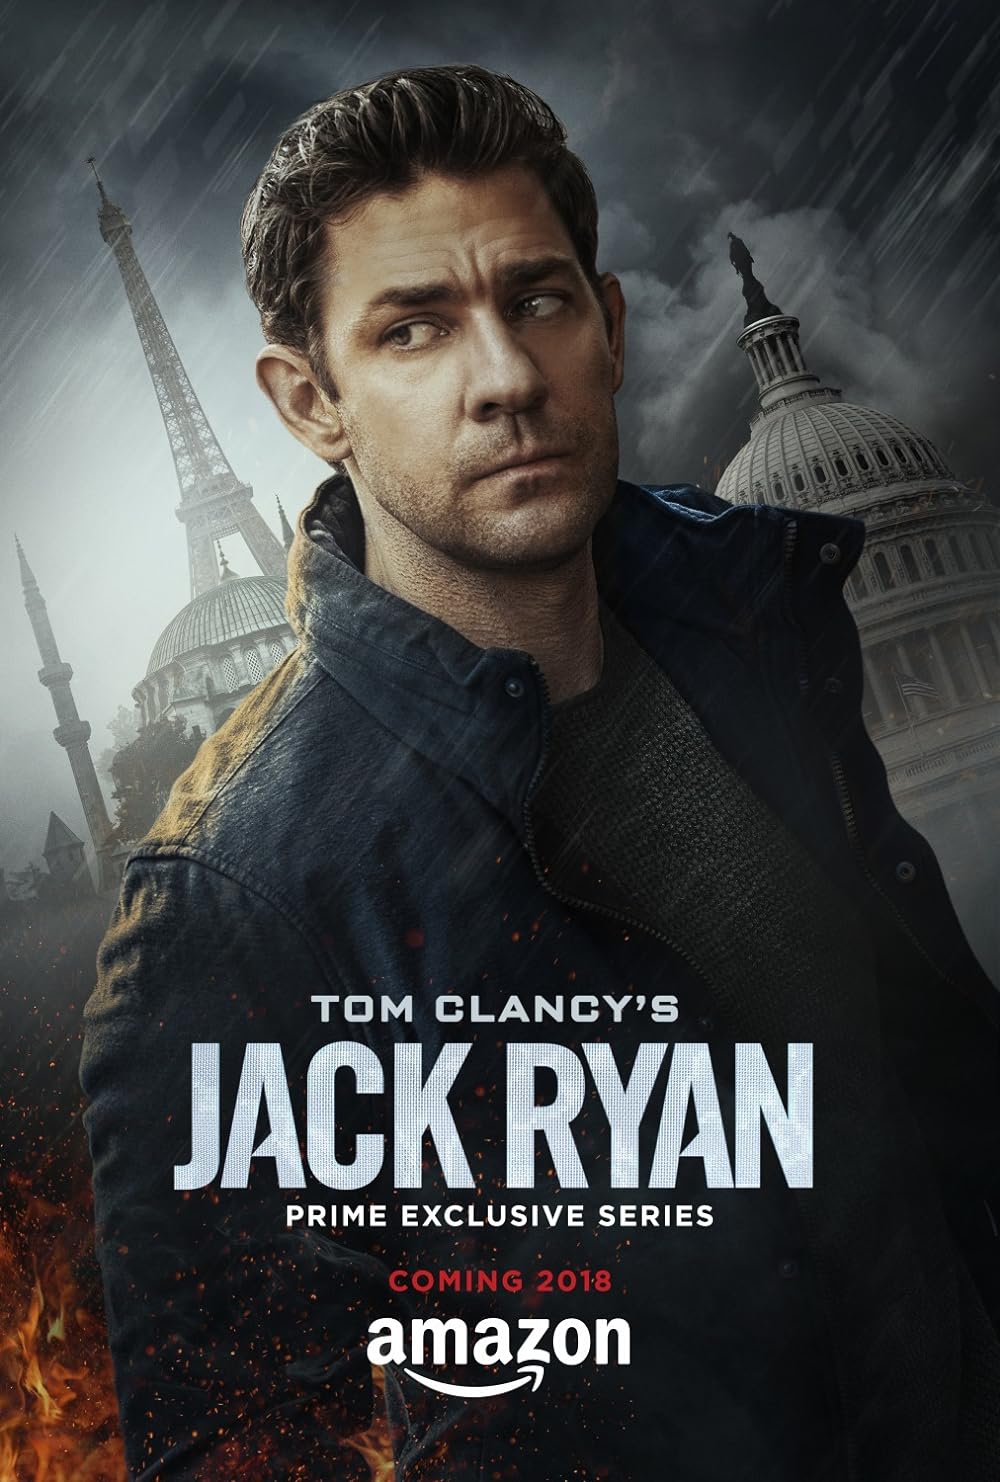 Tom Clancy's Jack Ryan (2022) S3 EP01&EP08 640Kbps 23.976Fps 48Khz 5.1Ch DD+ AMZN E-AC3 Turkish Audio TAC